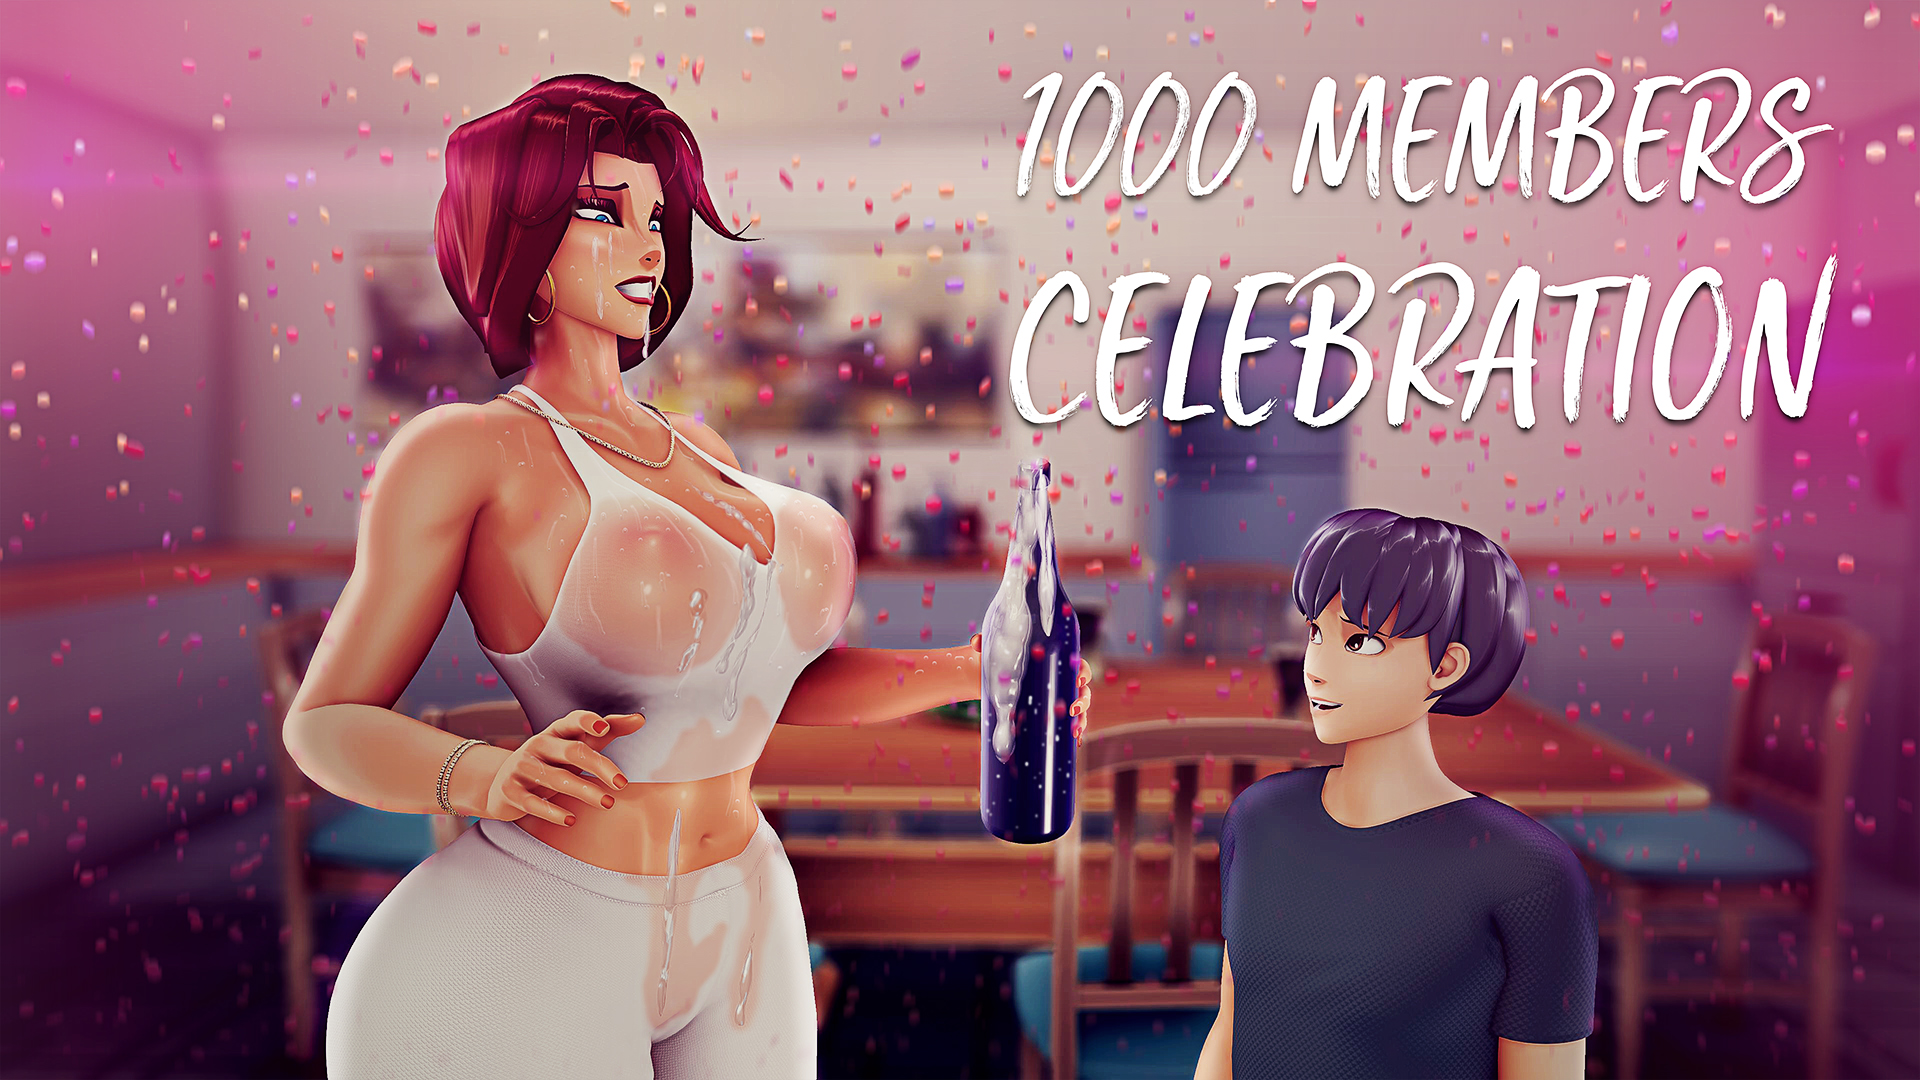 Thanks everyone for 1000 discord members! 